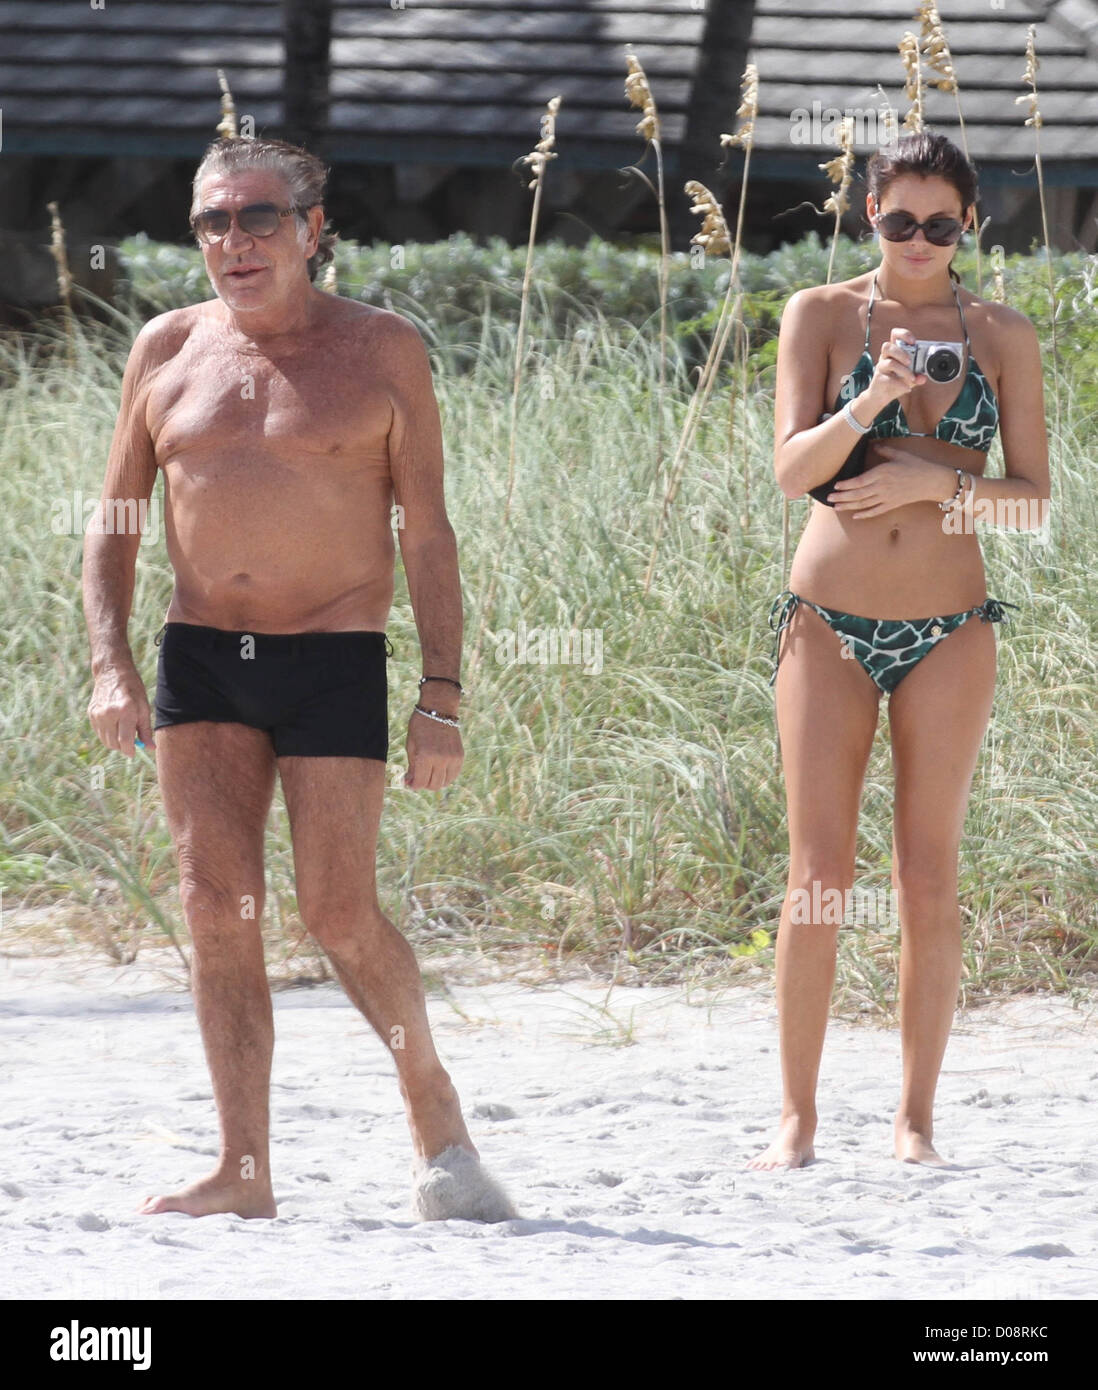 Roberto Cavalli enjoying the sunshine while on holiday with a friend on  Miami beach Miami, USA - 19.11.10for Stock Photo - Alamy